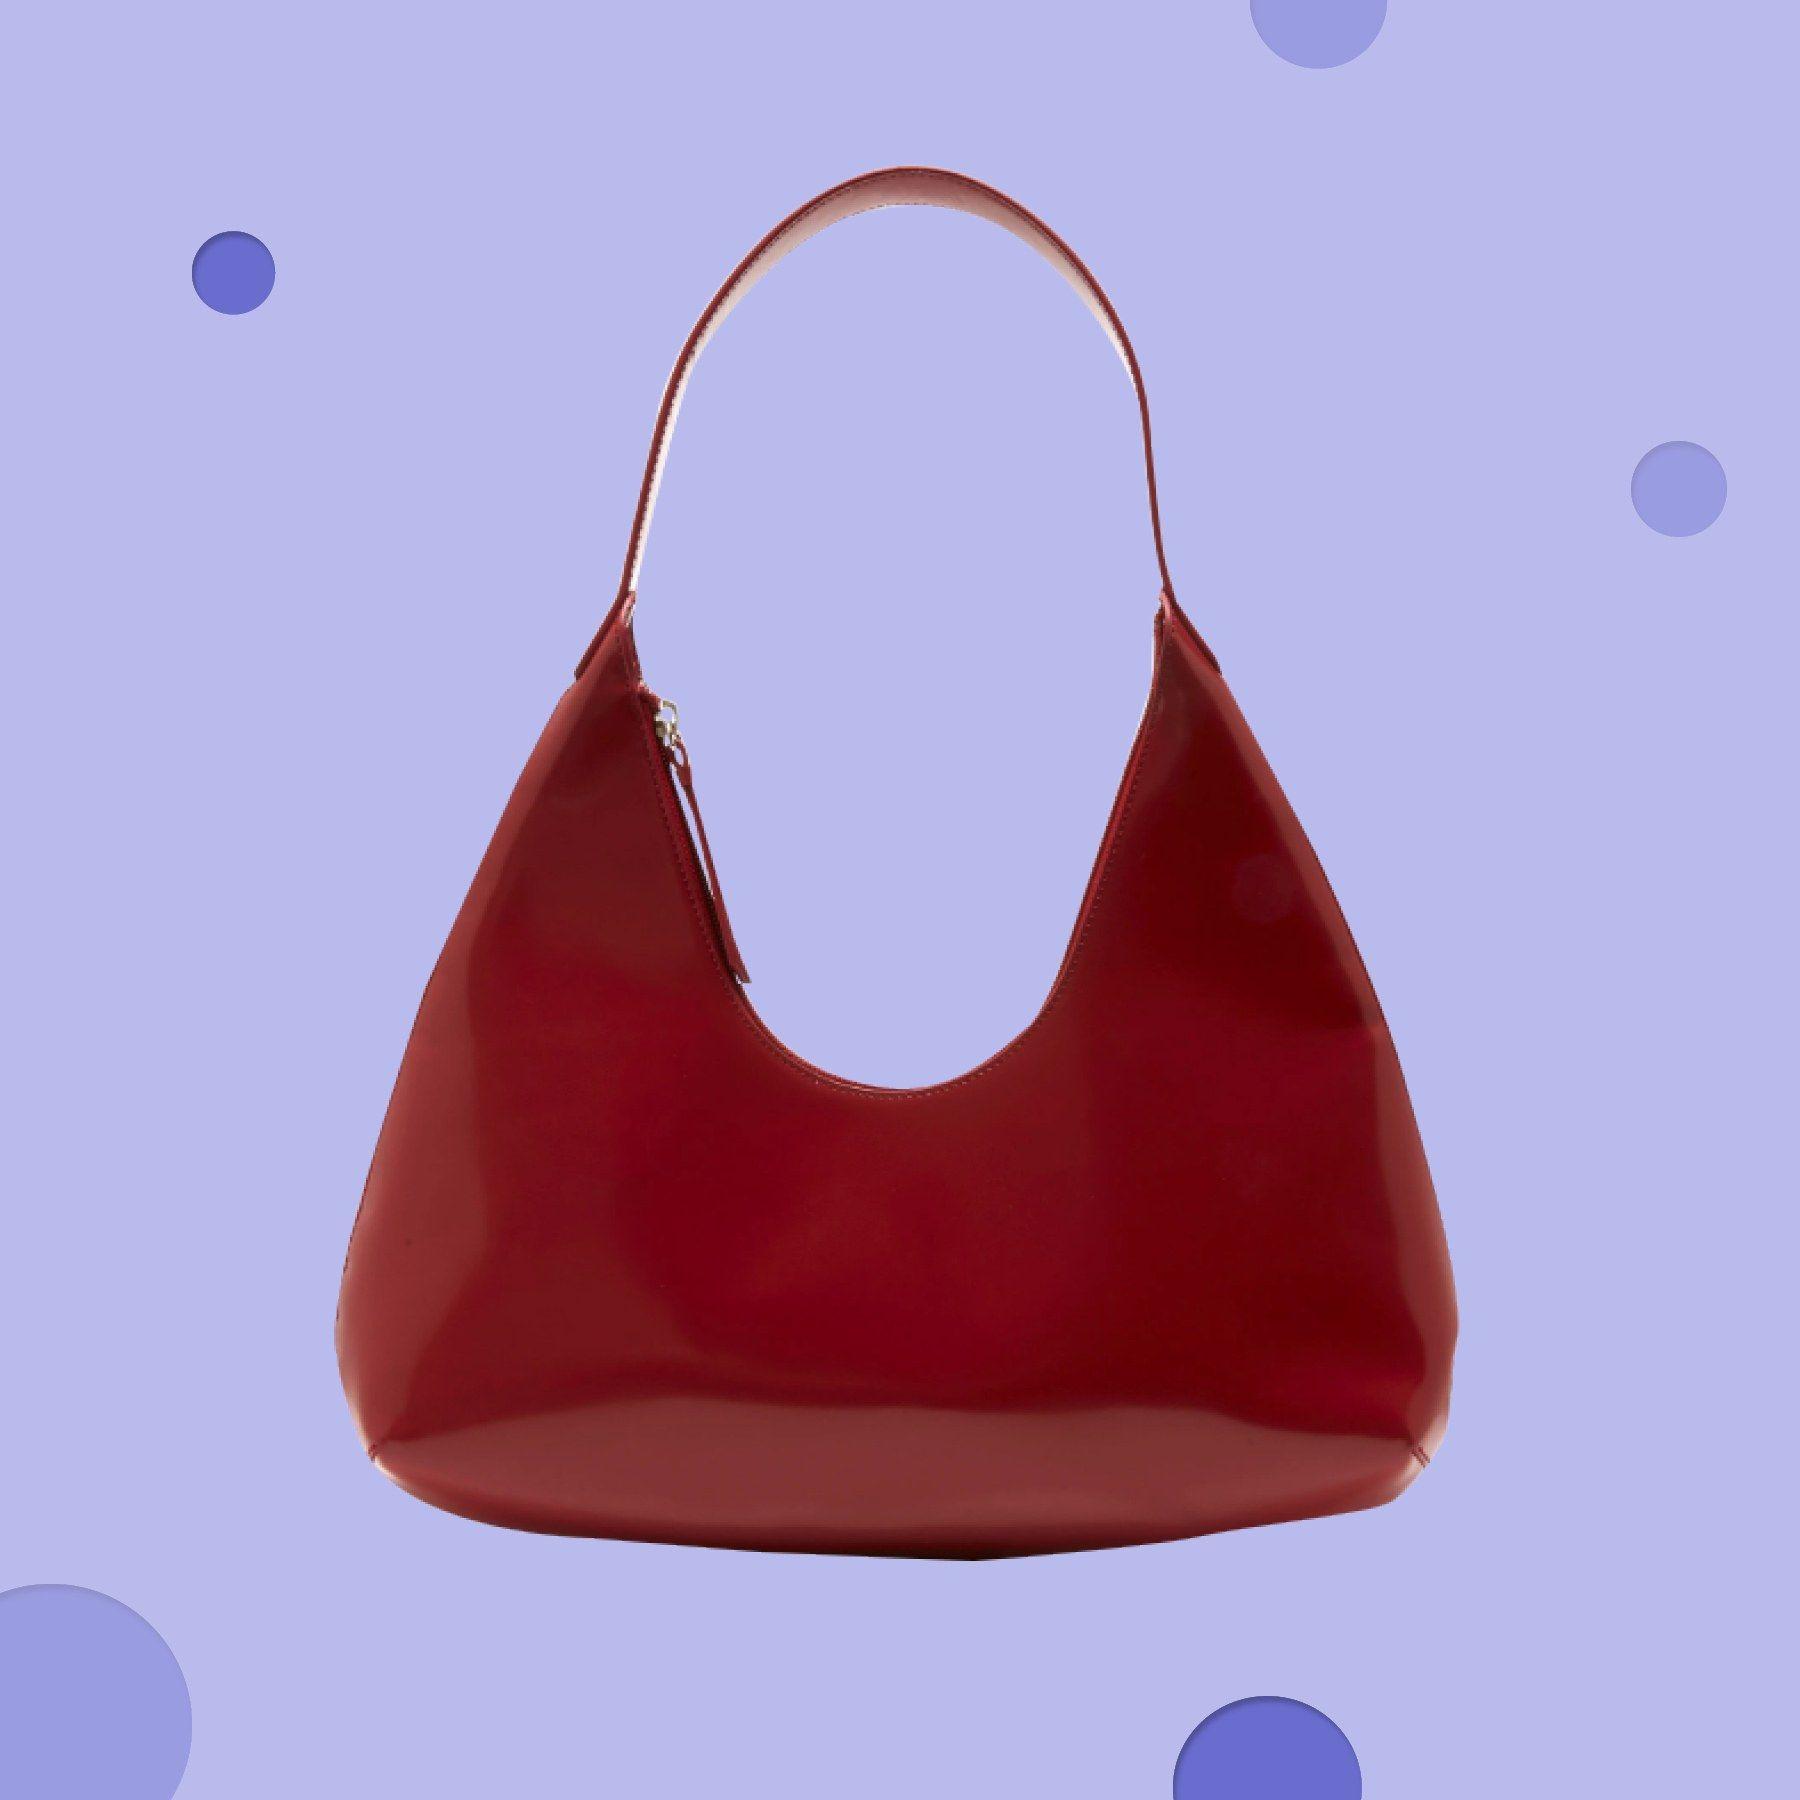 Handbag Logo - Handbag Brands Making the New It Bags of 2019